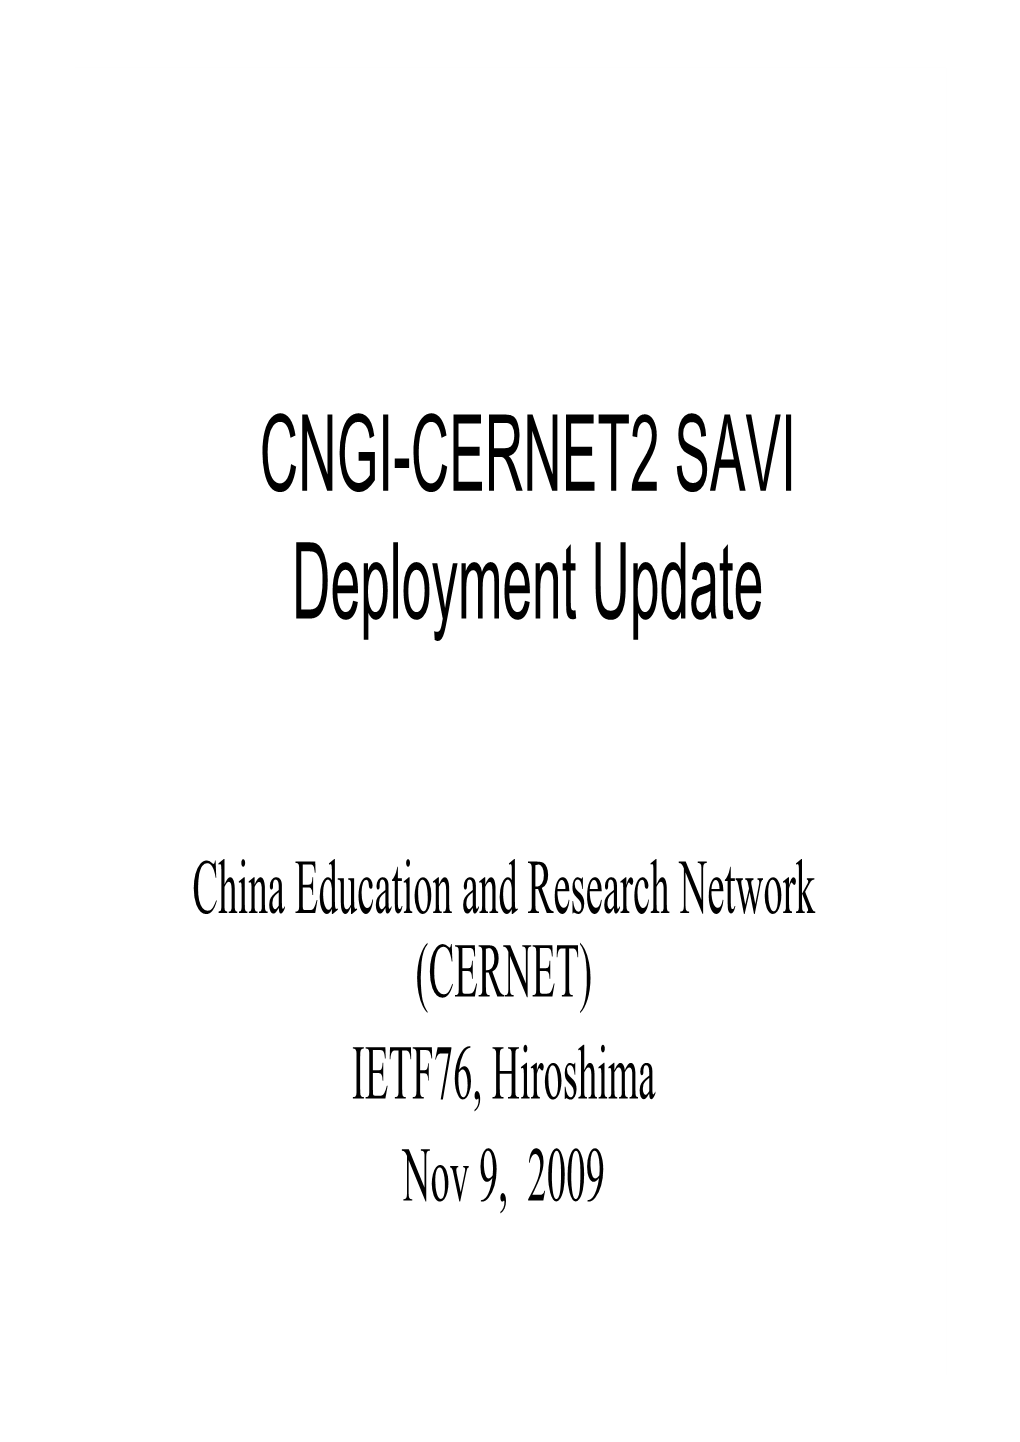 CNGI-CERNET2 SAVI Deployment Update